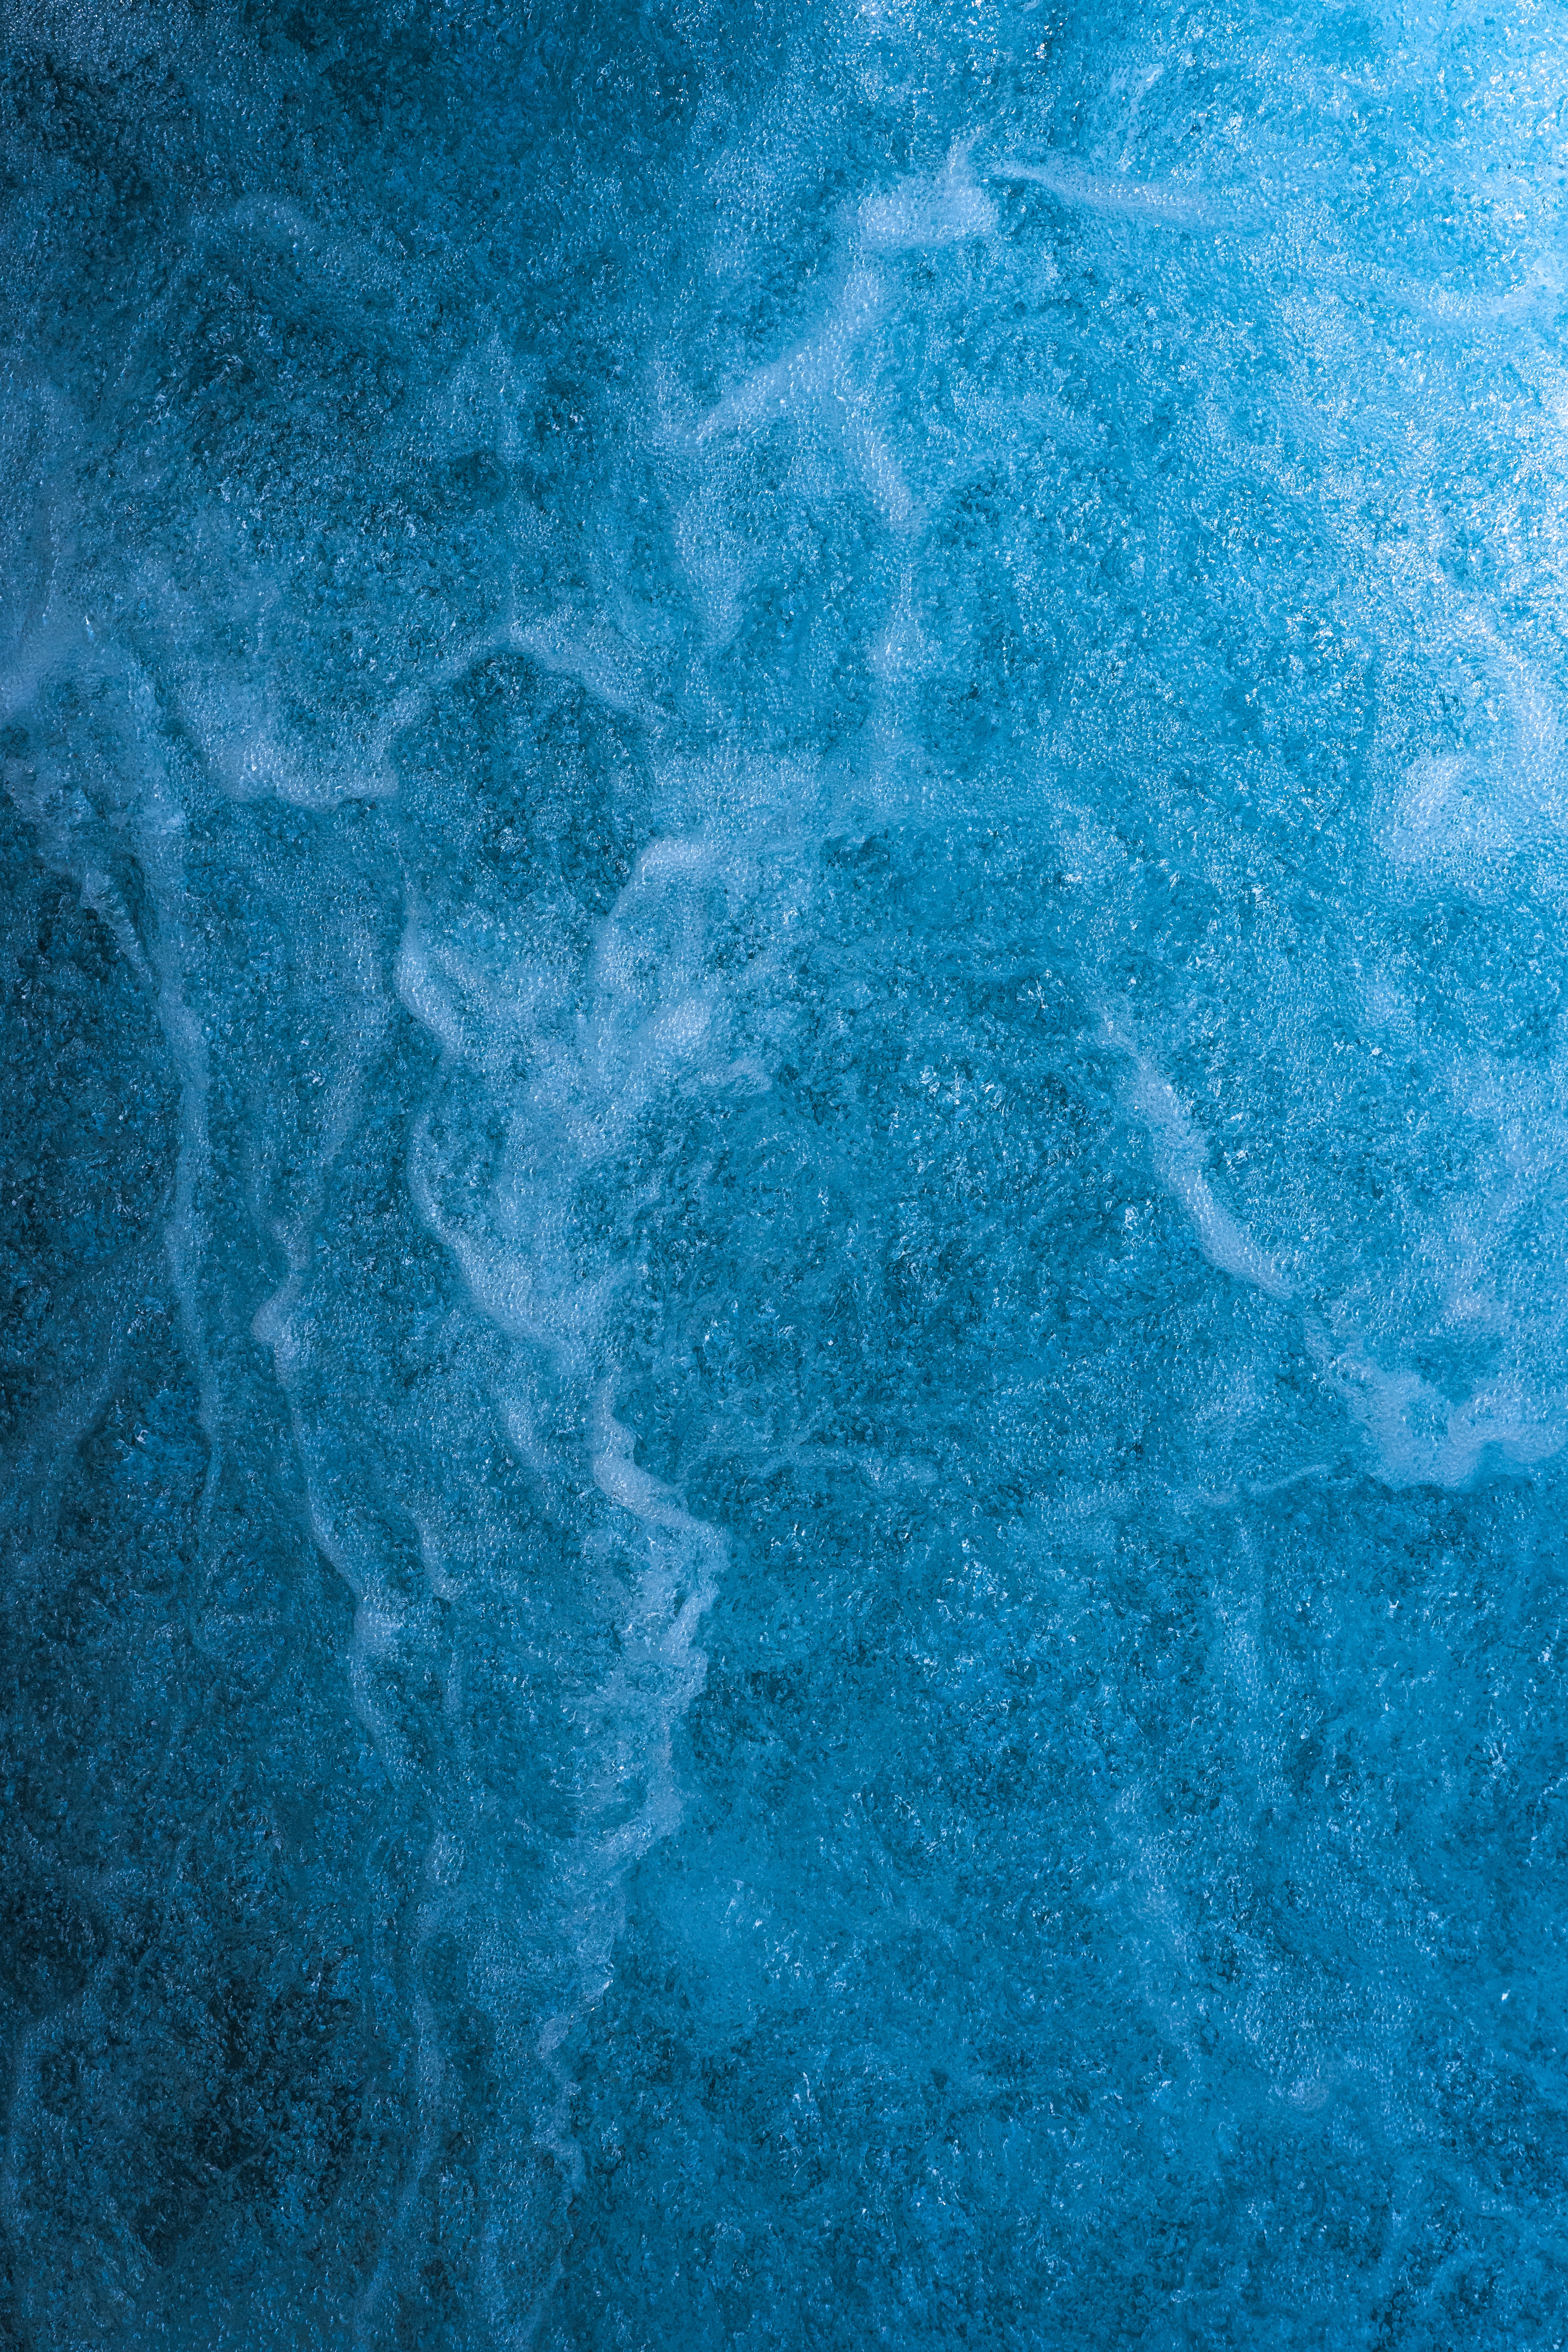 textures, texture, water, waves, blue, liquid lock screen backgrounds